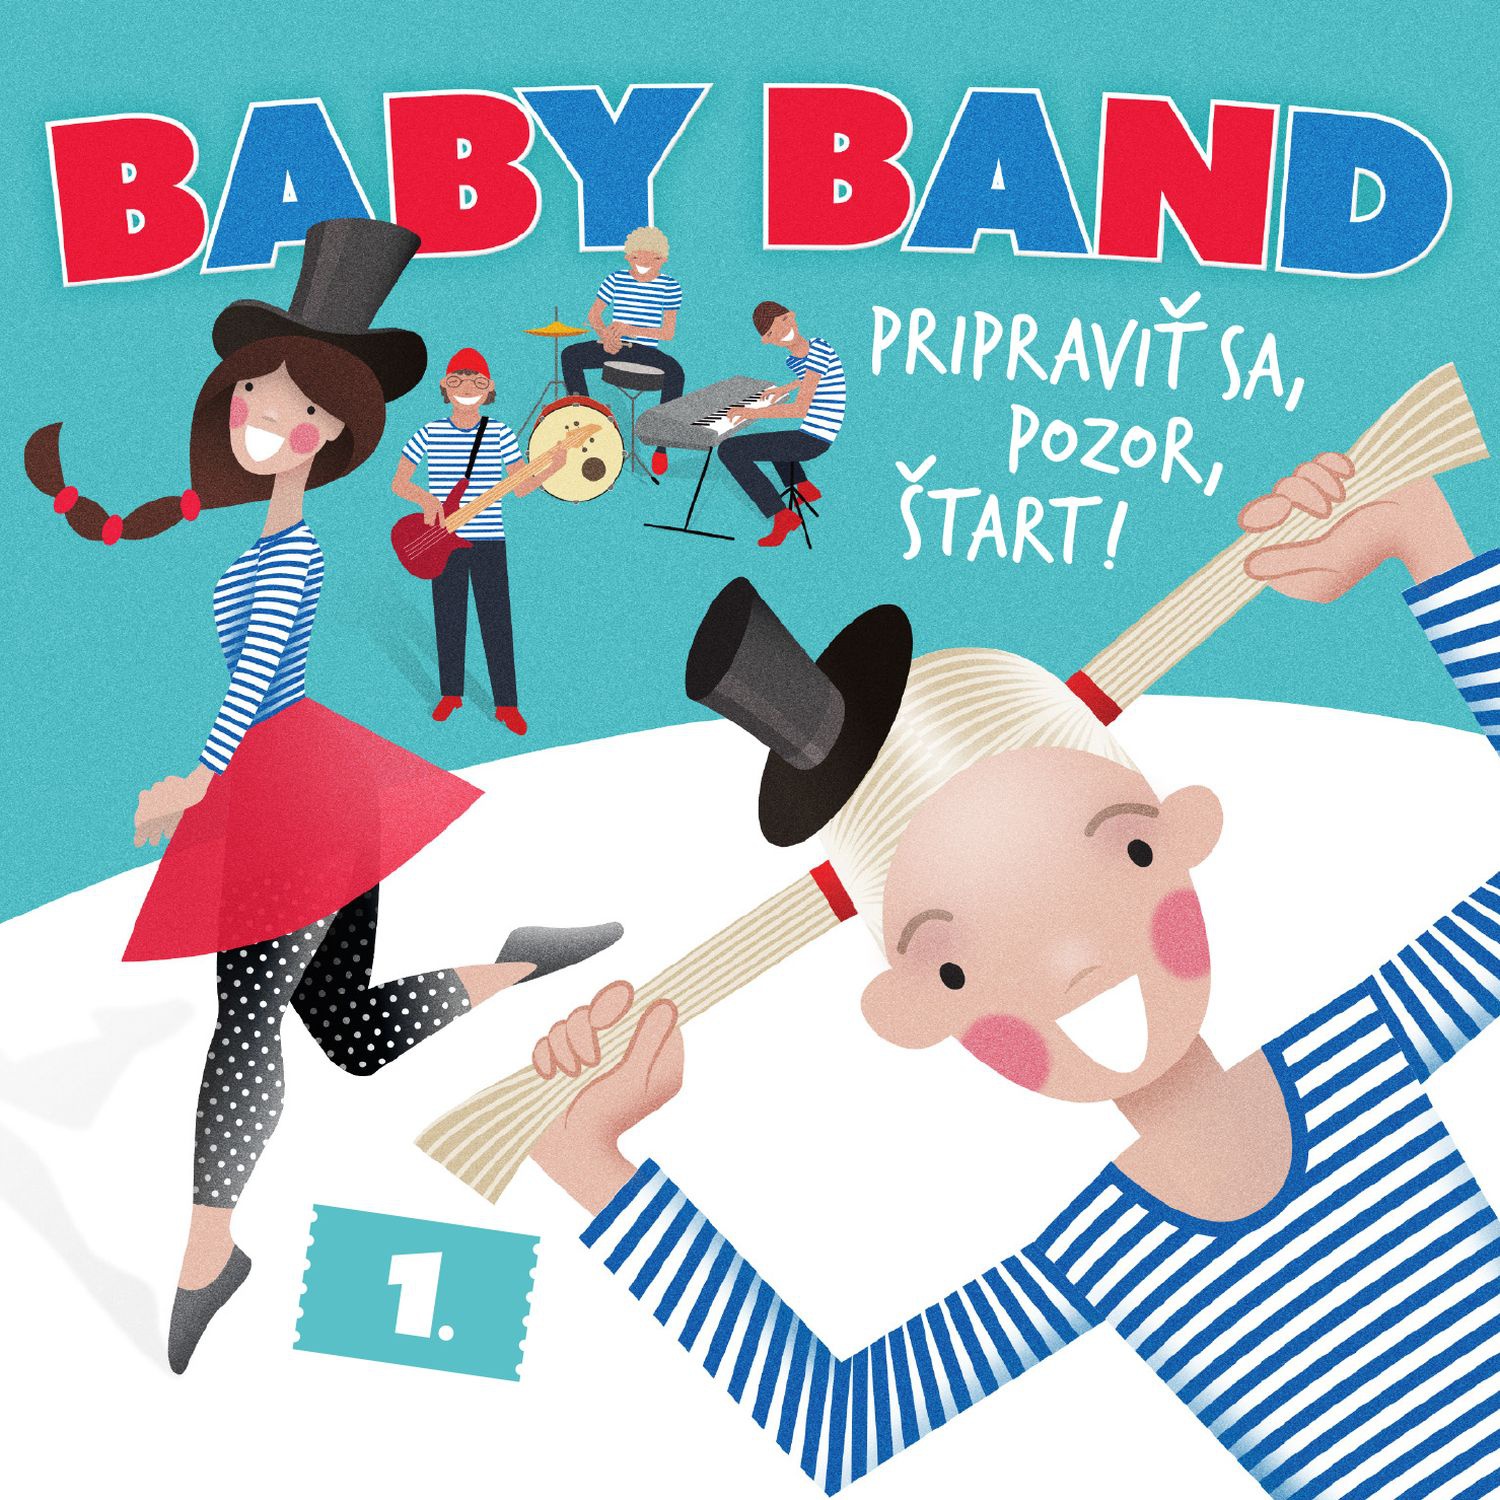 CD Shop - BABY BAND PRIPRAVIT SA, POZOR, START!